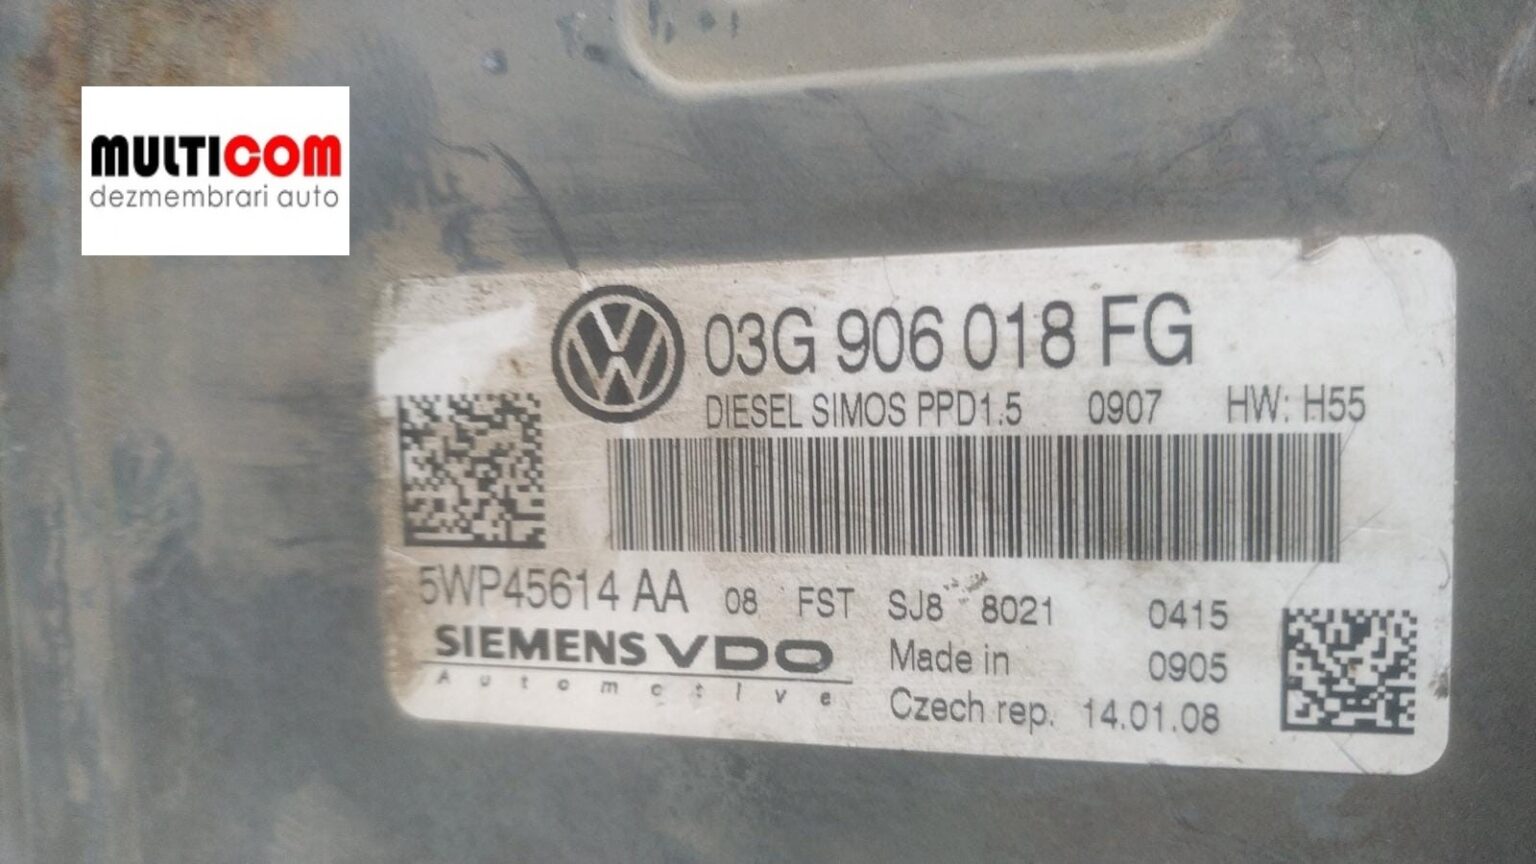 ECU / Calculator motor VW Passat B6 cod 03G906018FG